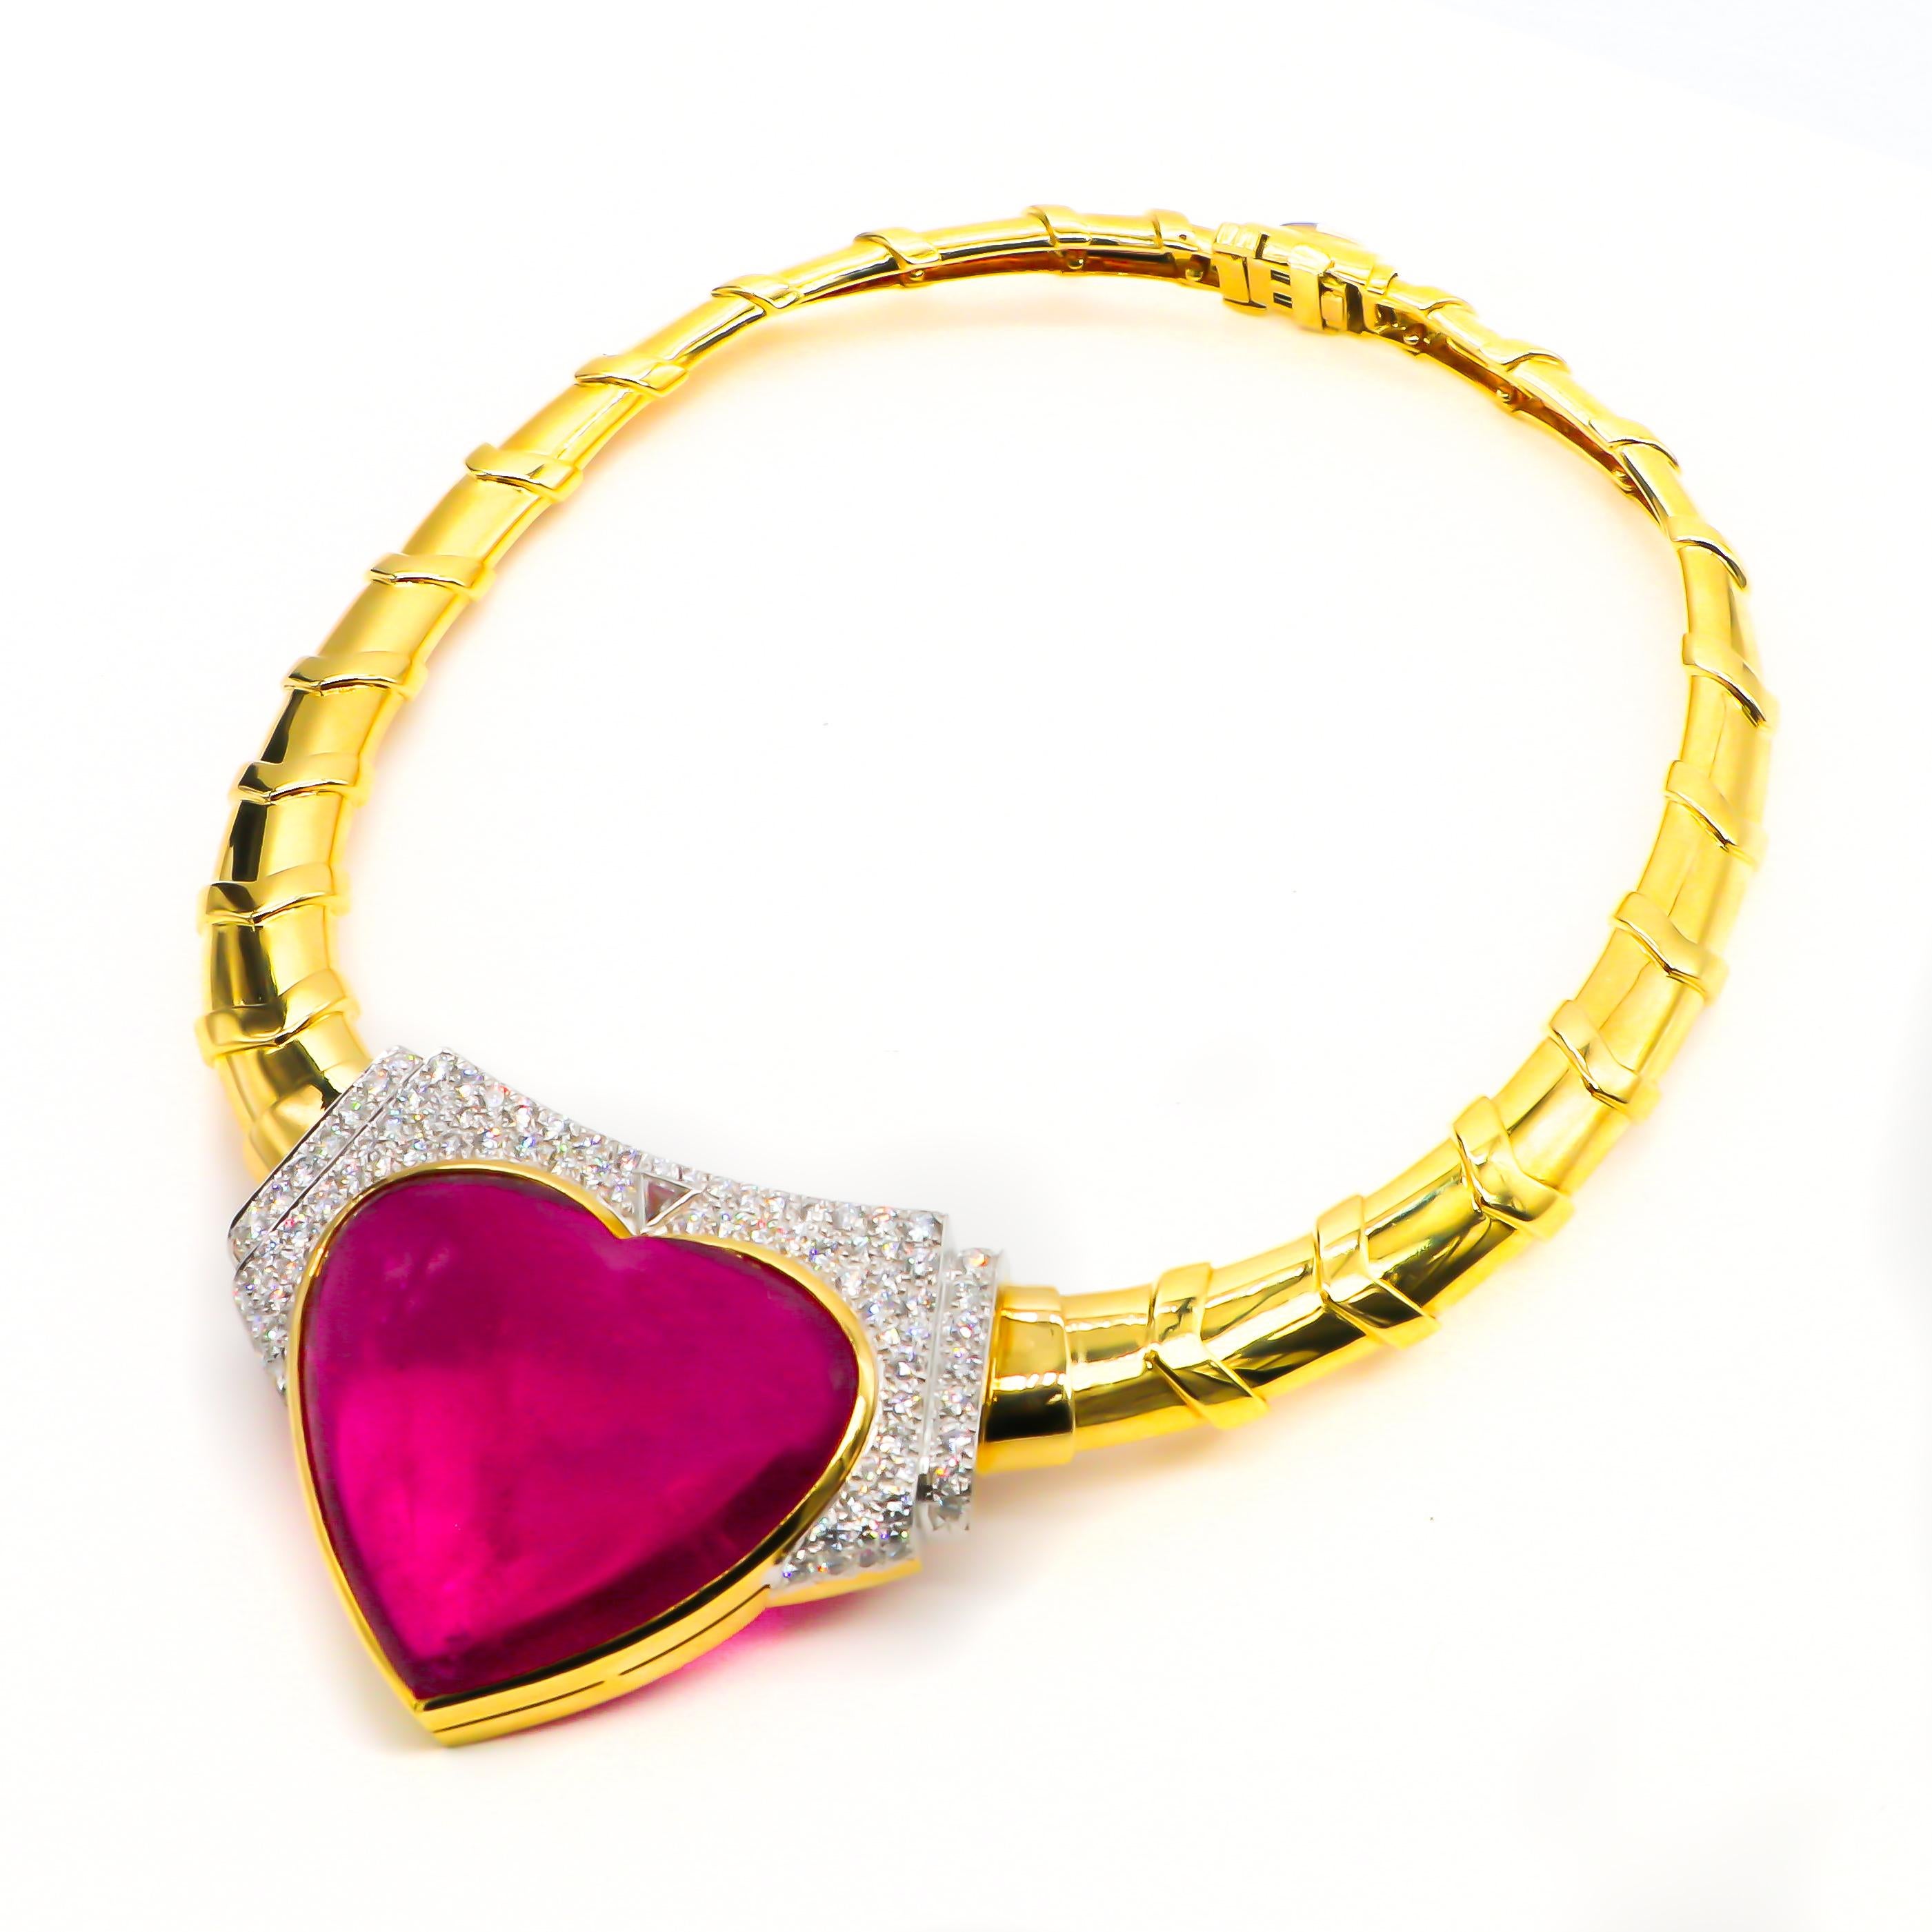 Heart Cut David Webb 80 Carat Rubellite Tourmaline Necklace with Diamonds 5.26 Carat 18K